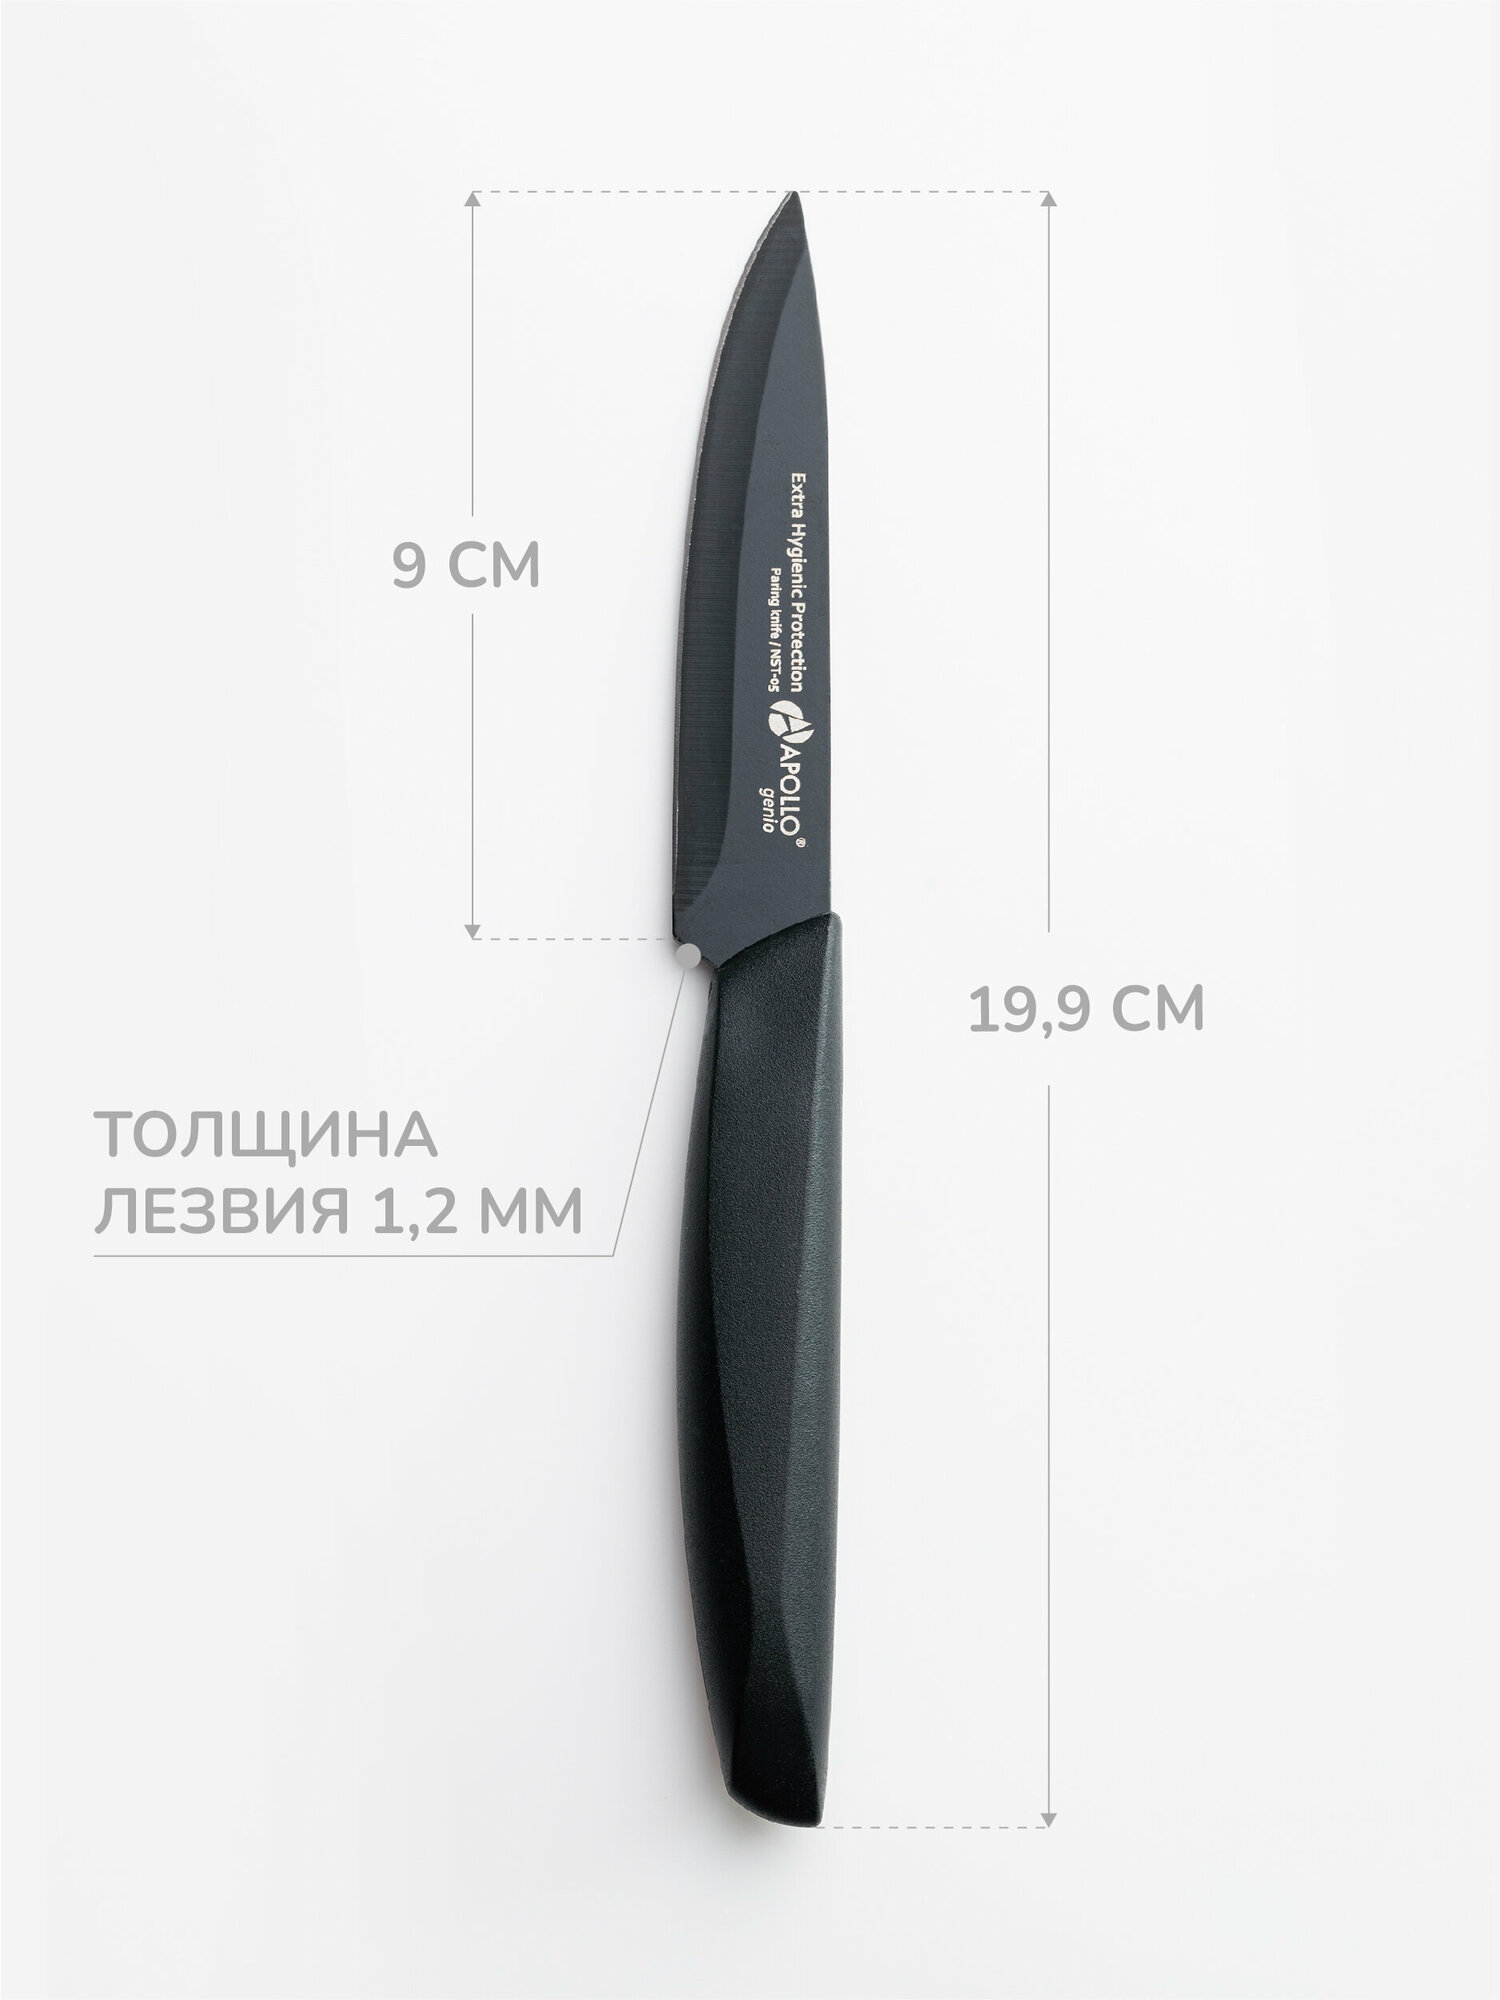 Нож для овощей APOLLO genio "Nero Steel", 9 см